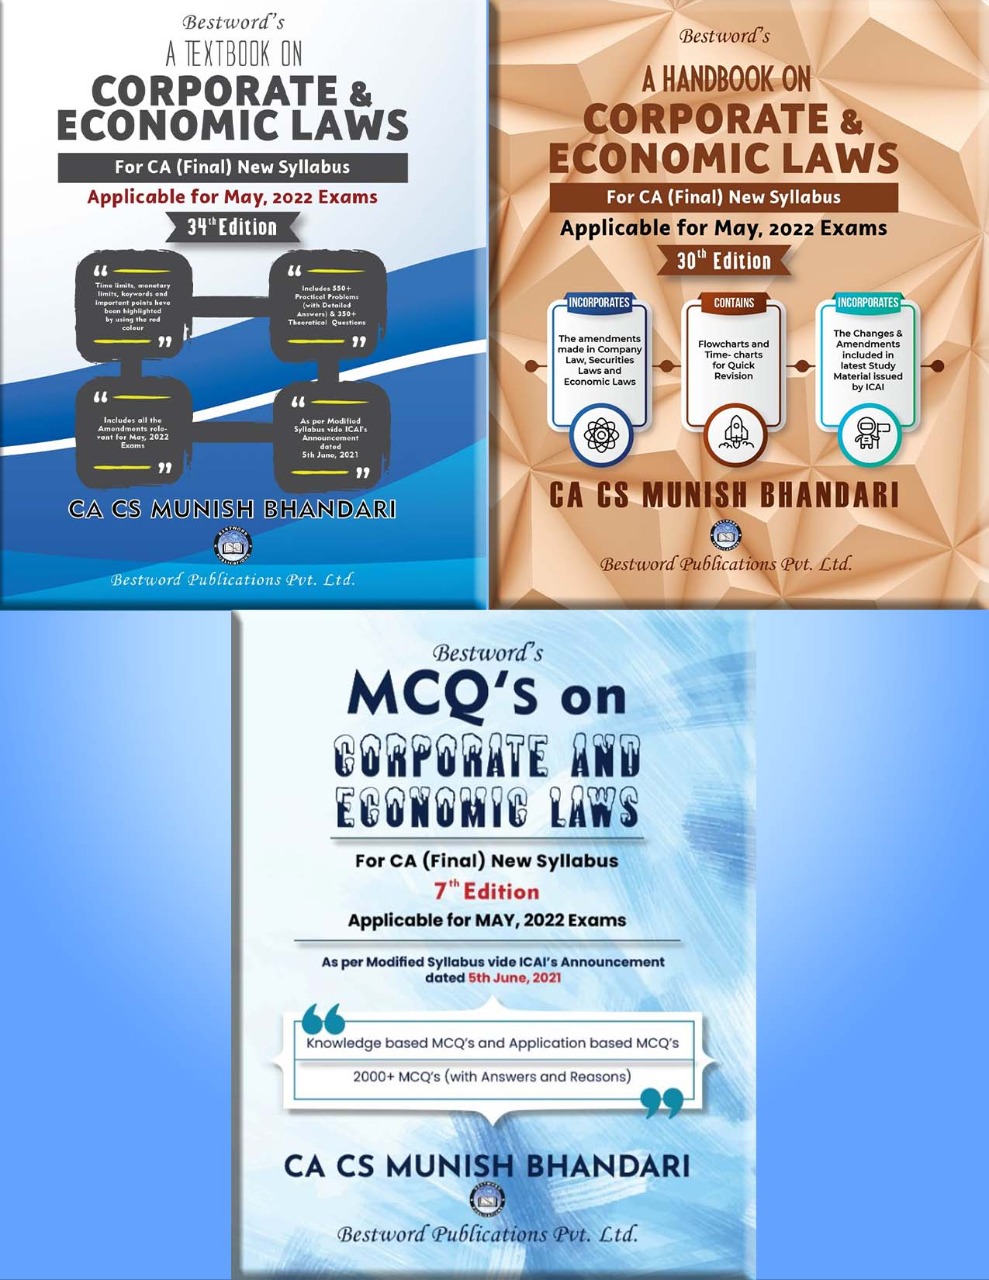 bestword's-combo-of-three-law-books-(textbook-34th-edition,-handbook-30th-edition-&-mcq's-book-7th-edition)---by-ca-cs-munish-bhandari----for-ca-(final)-may-2022-exams-(new-syllabus)